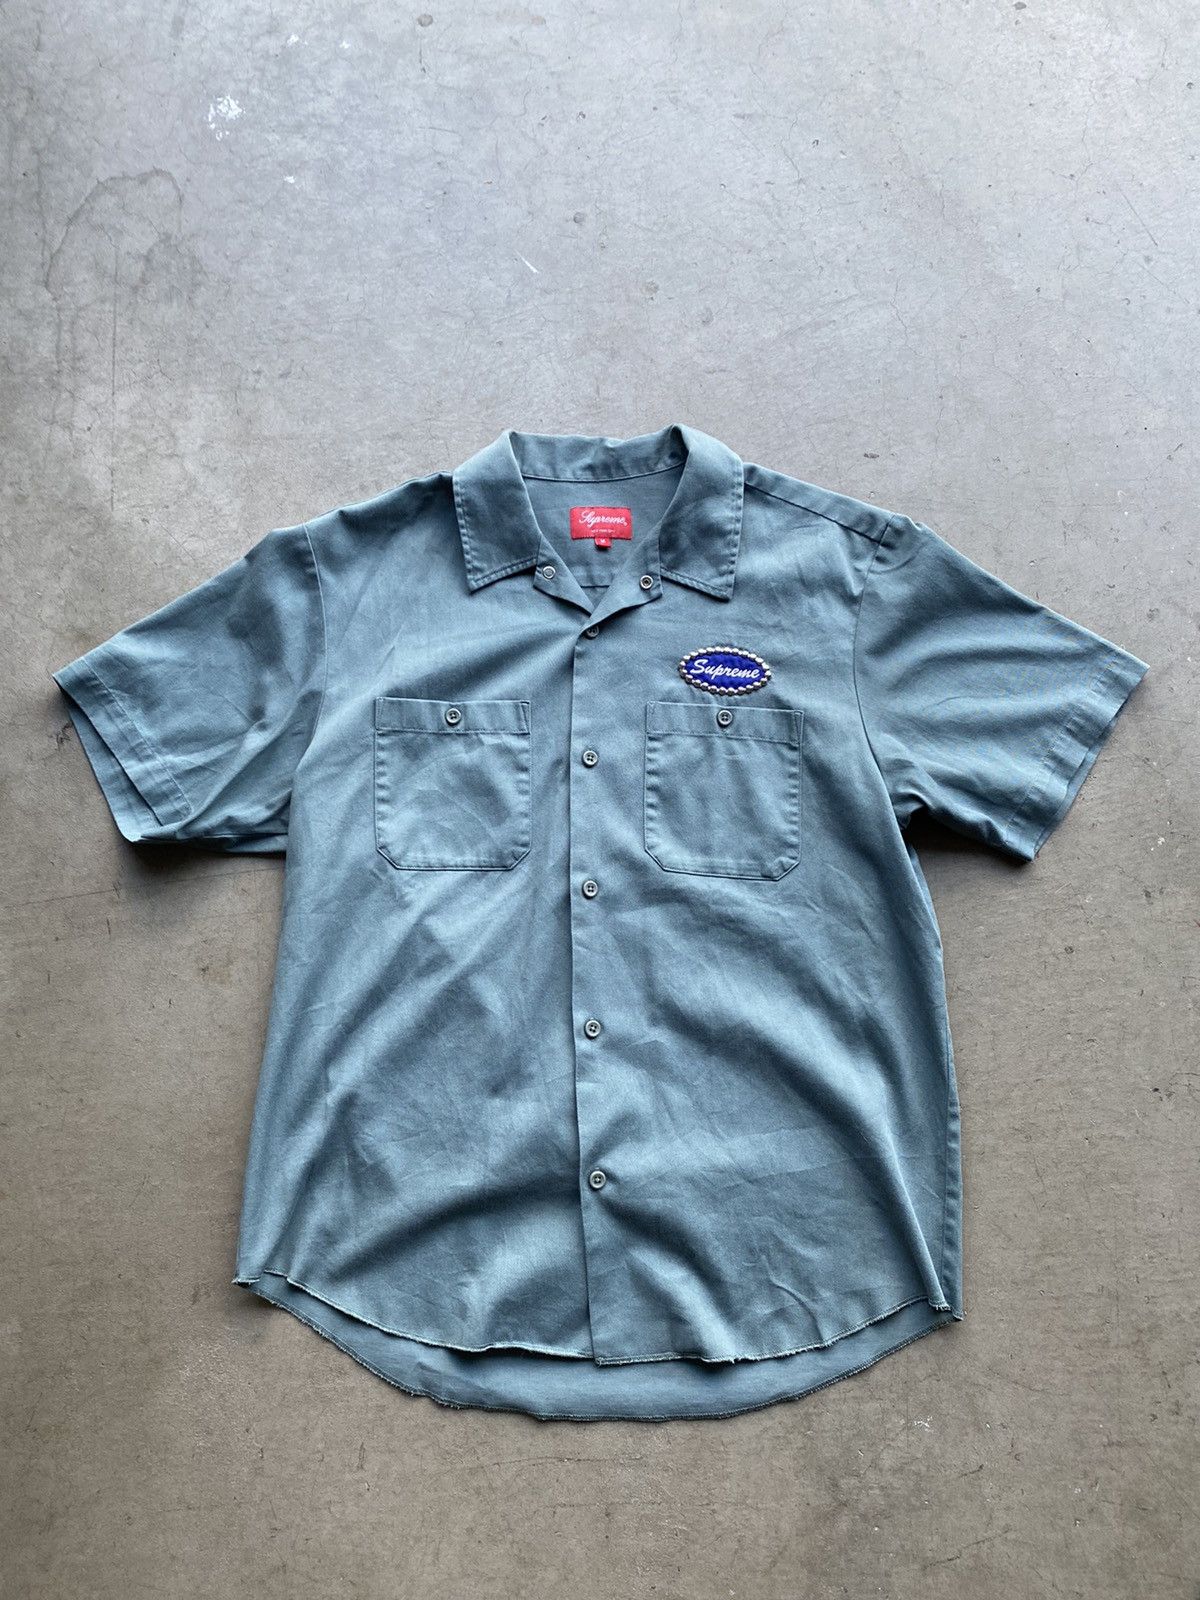 Supreme Supreme Studded Patch S/S Work Shirt | Grailed